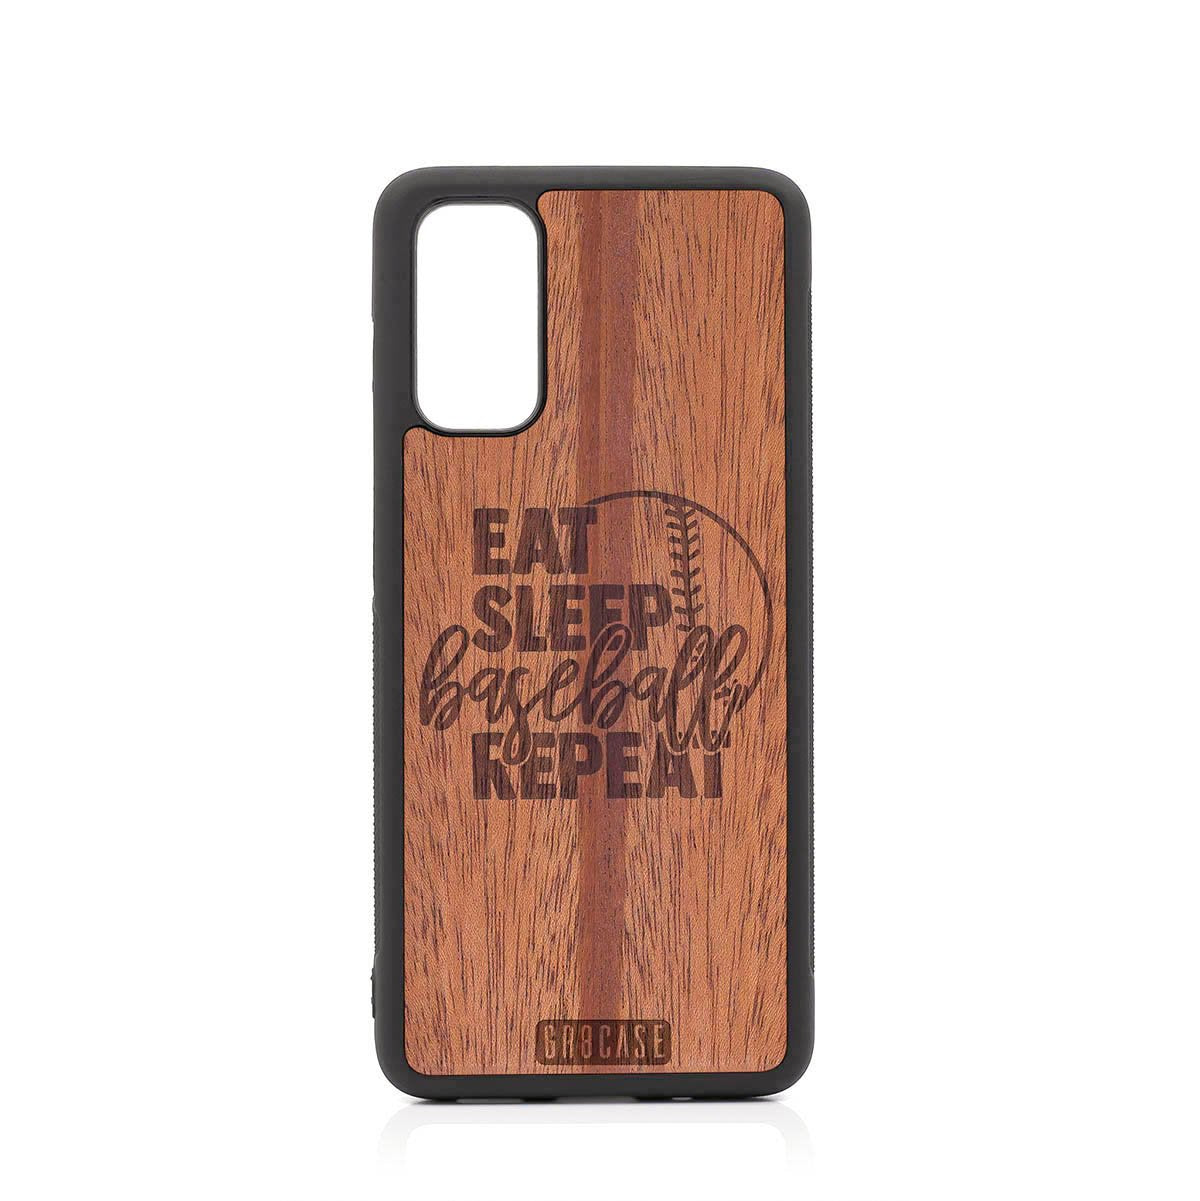 Eat Sleep Baseball Repeat Design Wood Case For Samsung Galaxy S20 FE 5G